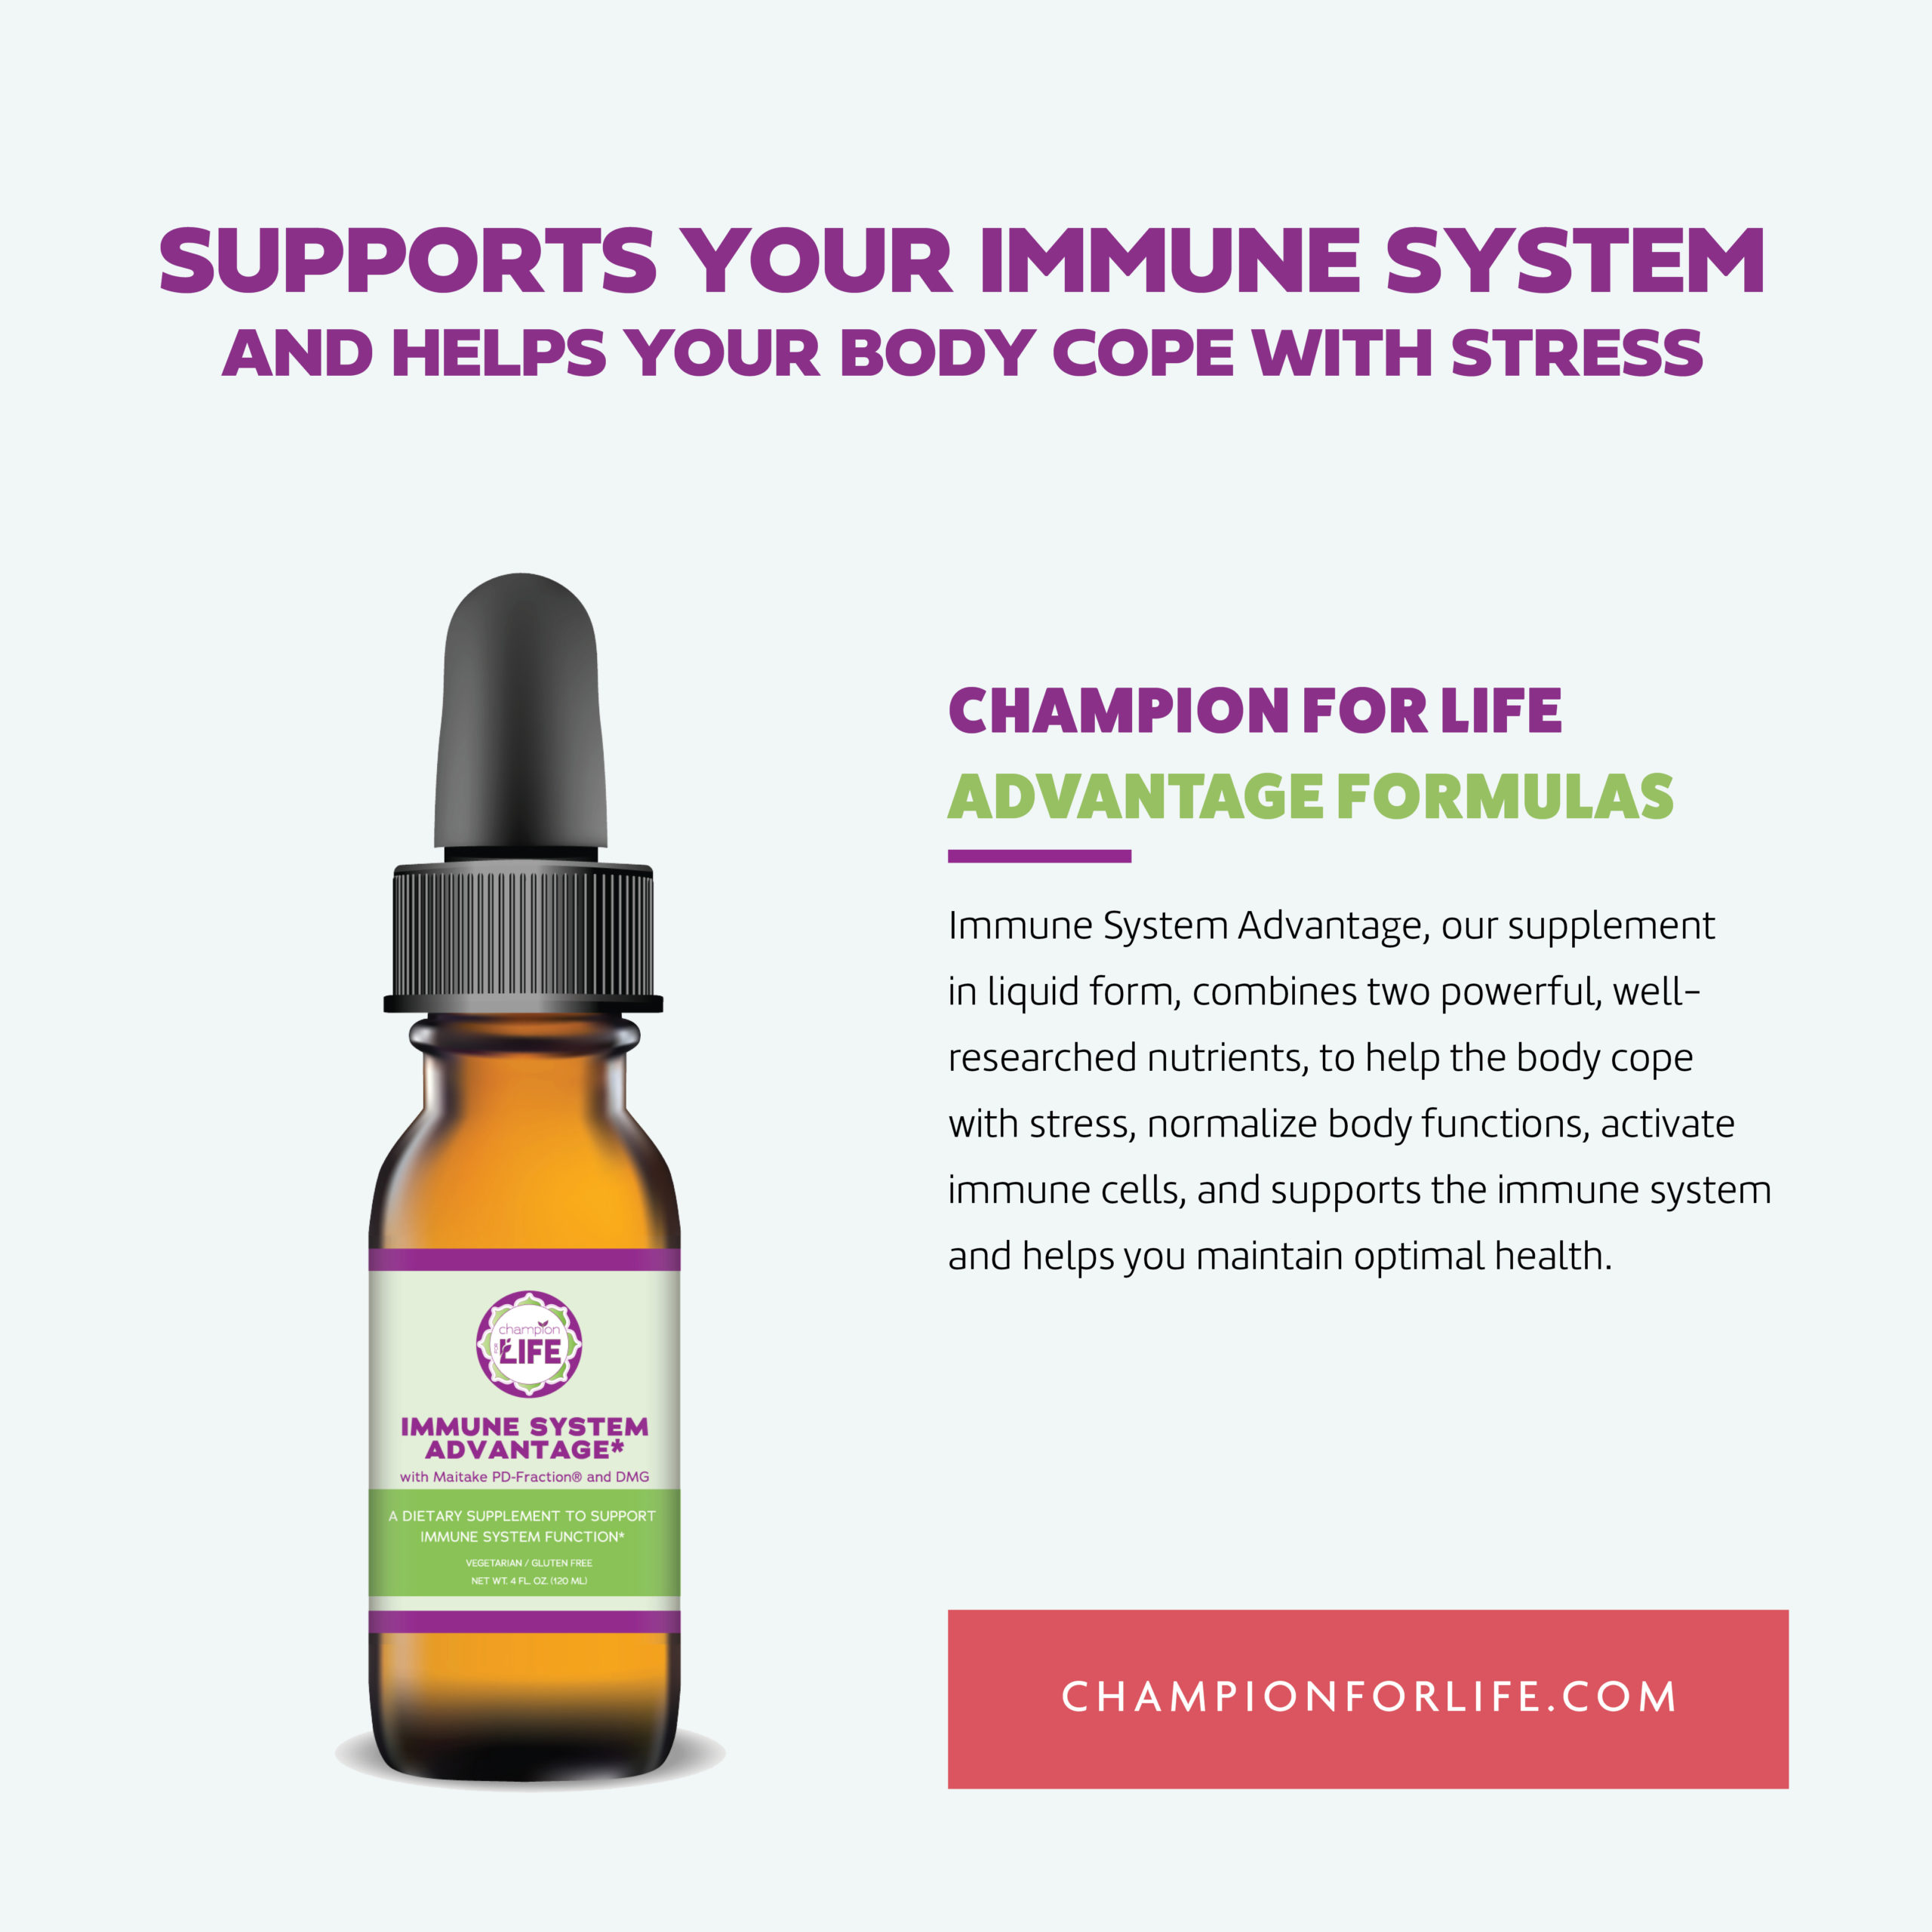 Immune System Advantage - Champion for Life